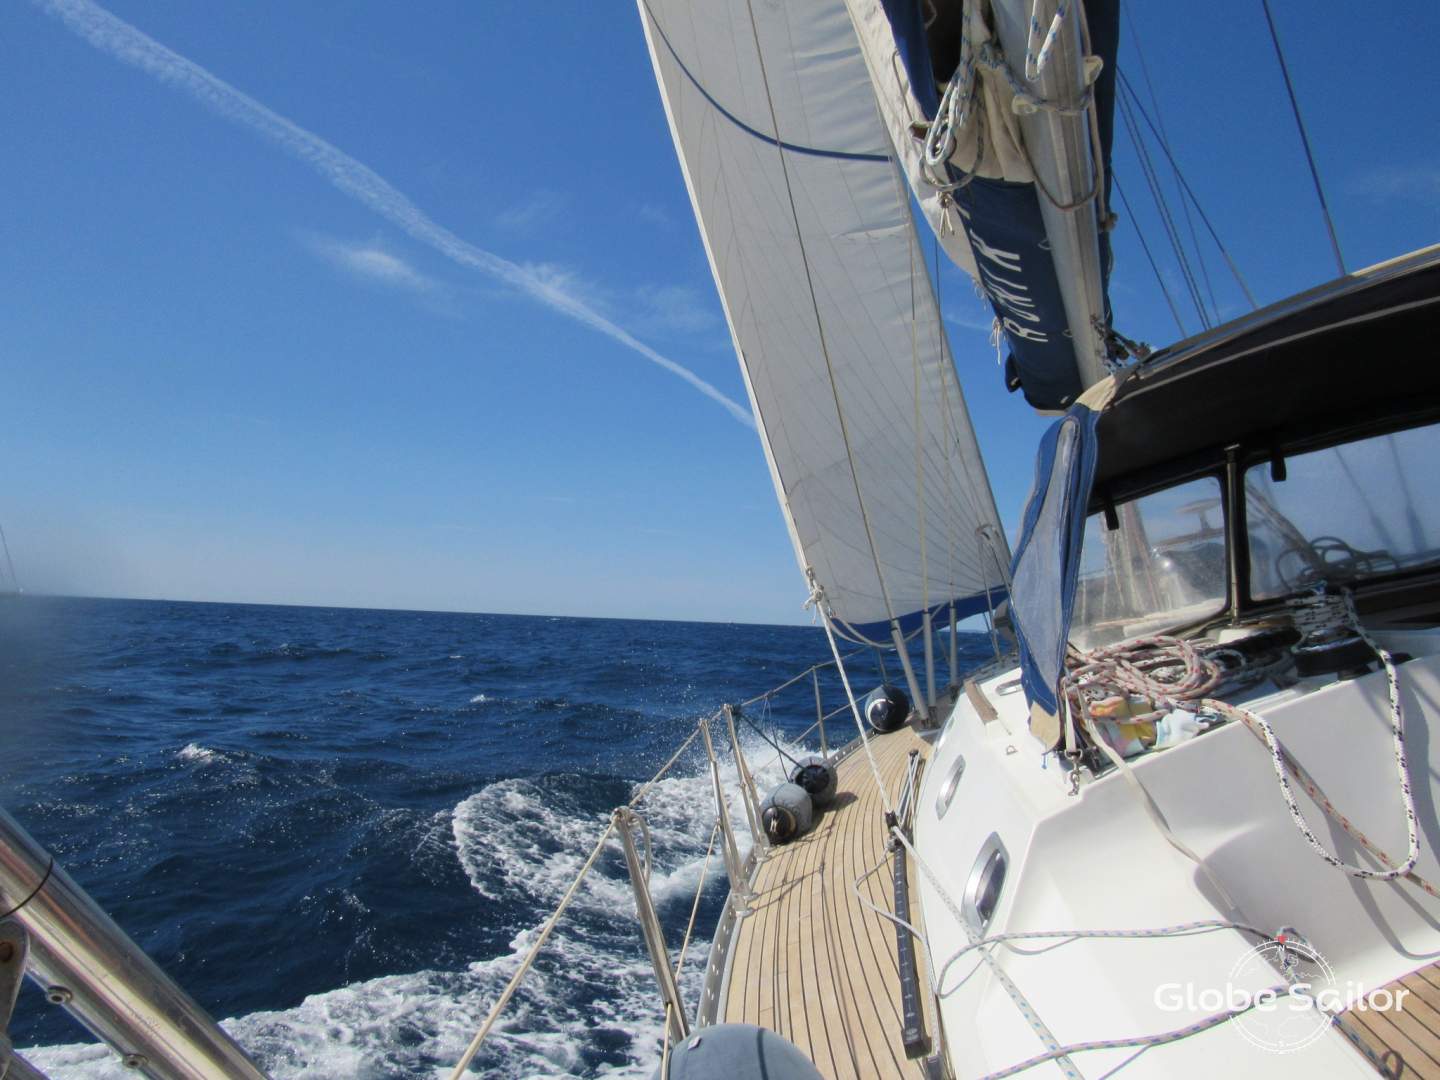 Set sail for the Aeolian Islands